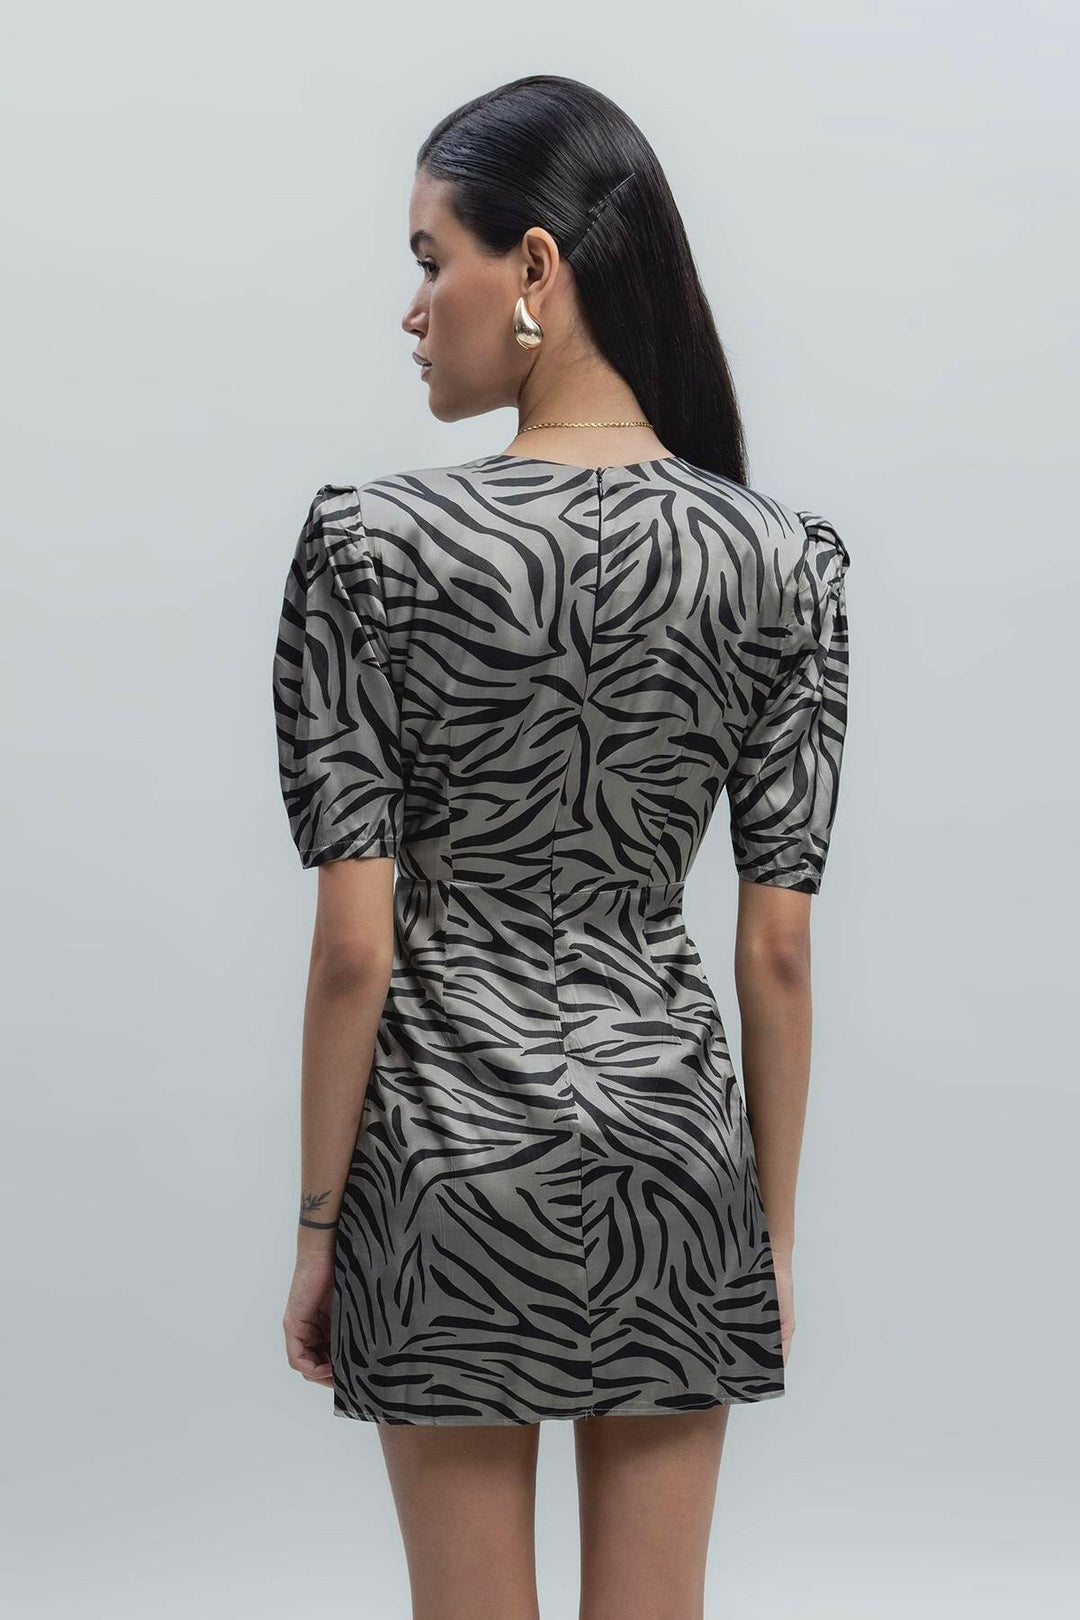 Satin Zebra Patterned Mini Dress